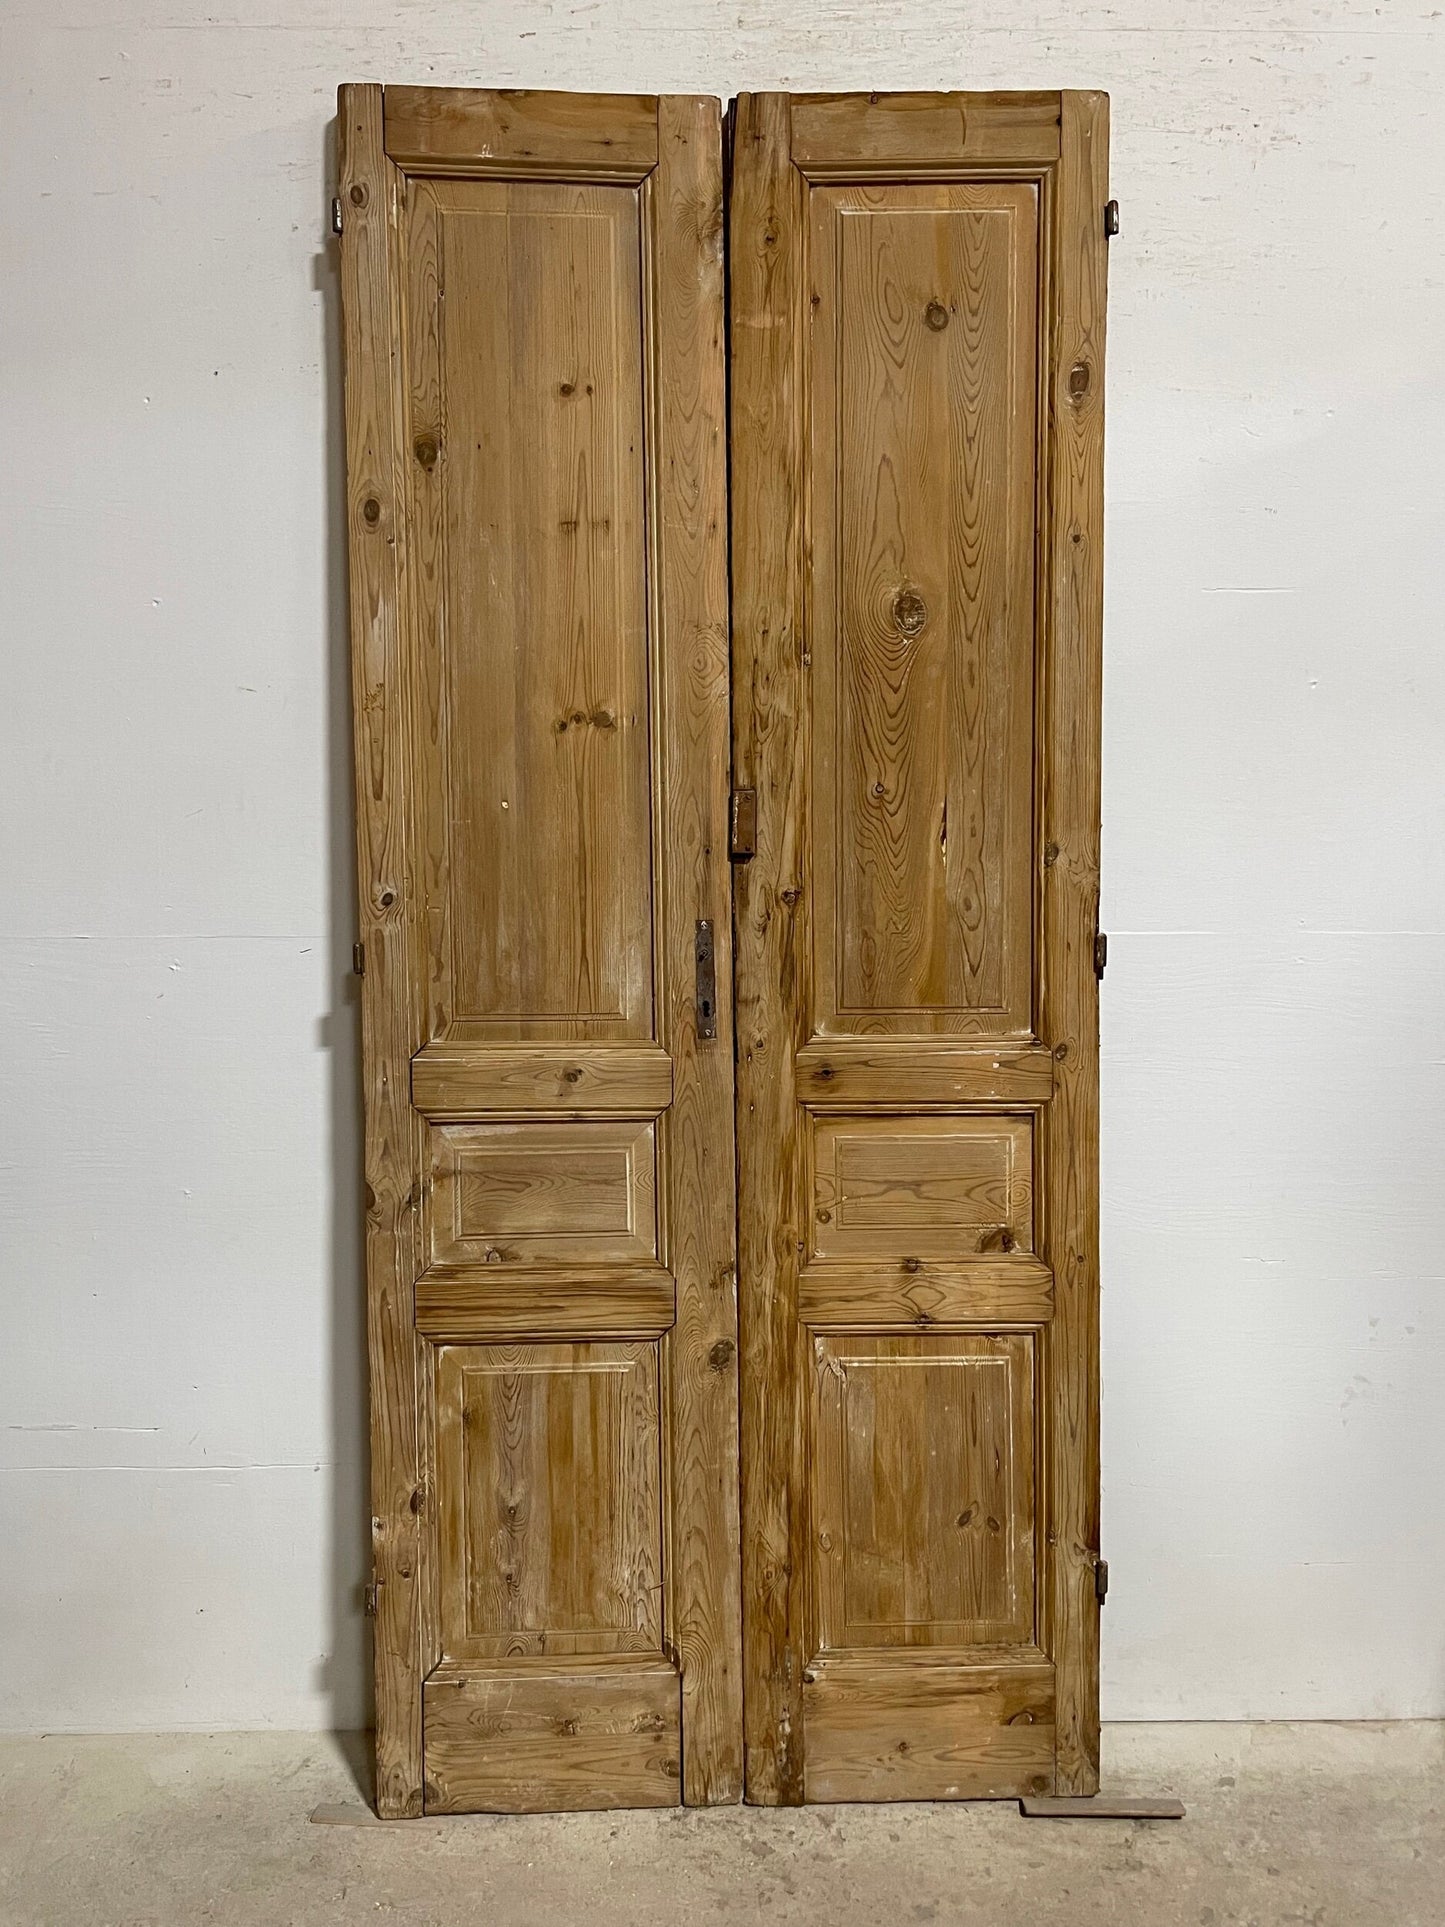 Antique french panel doors (92 x 40) I099